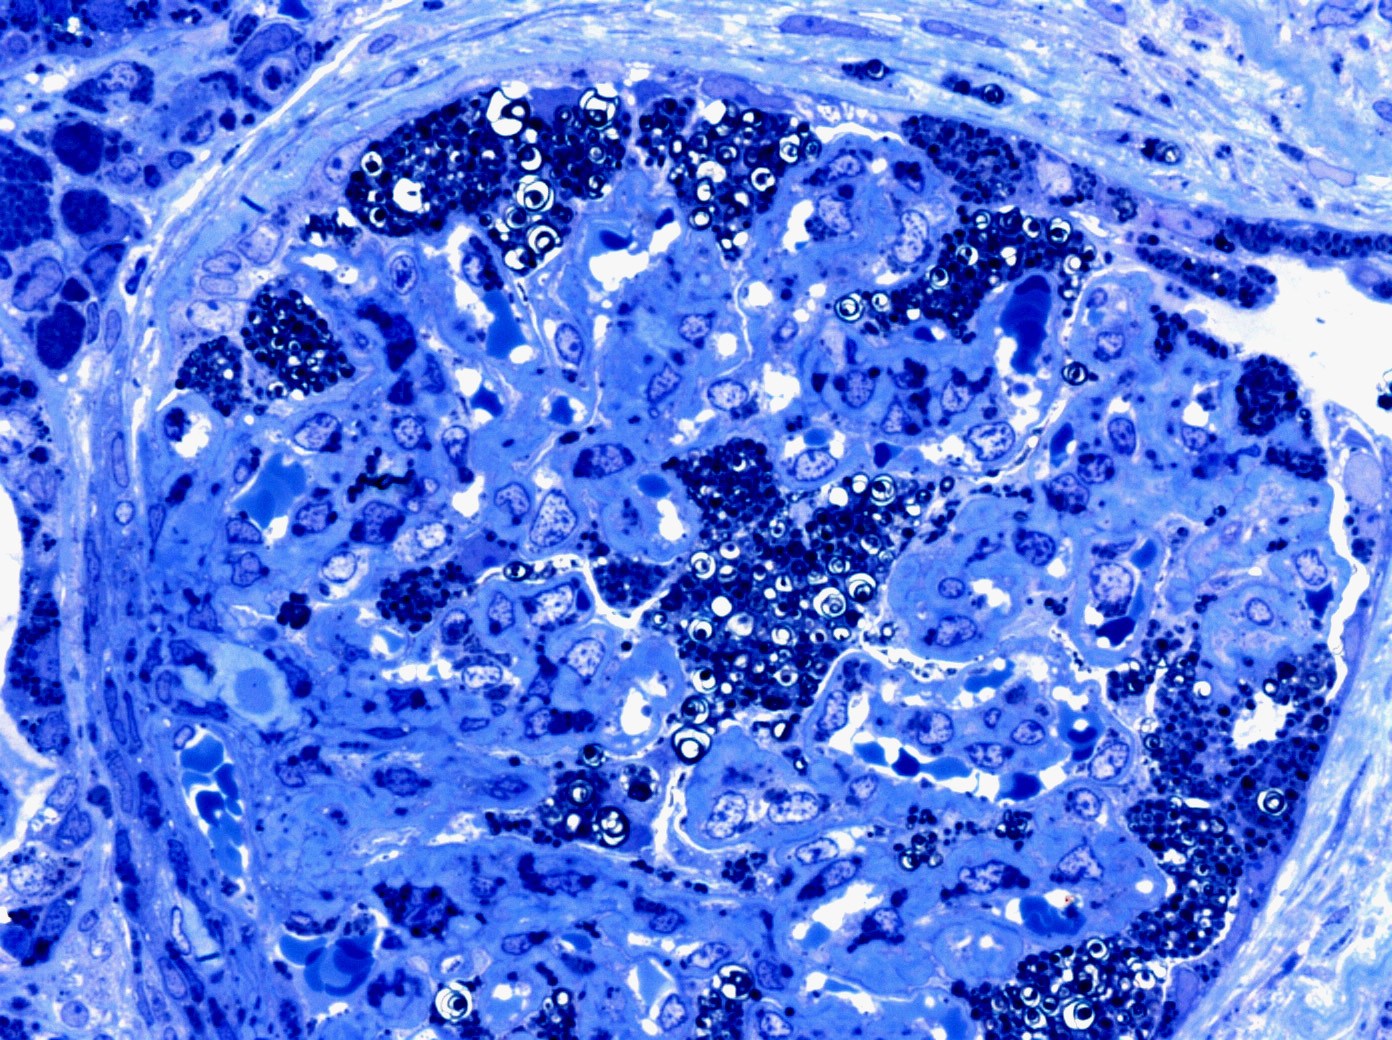 toluidine blue section showing fabry disease